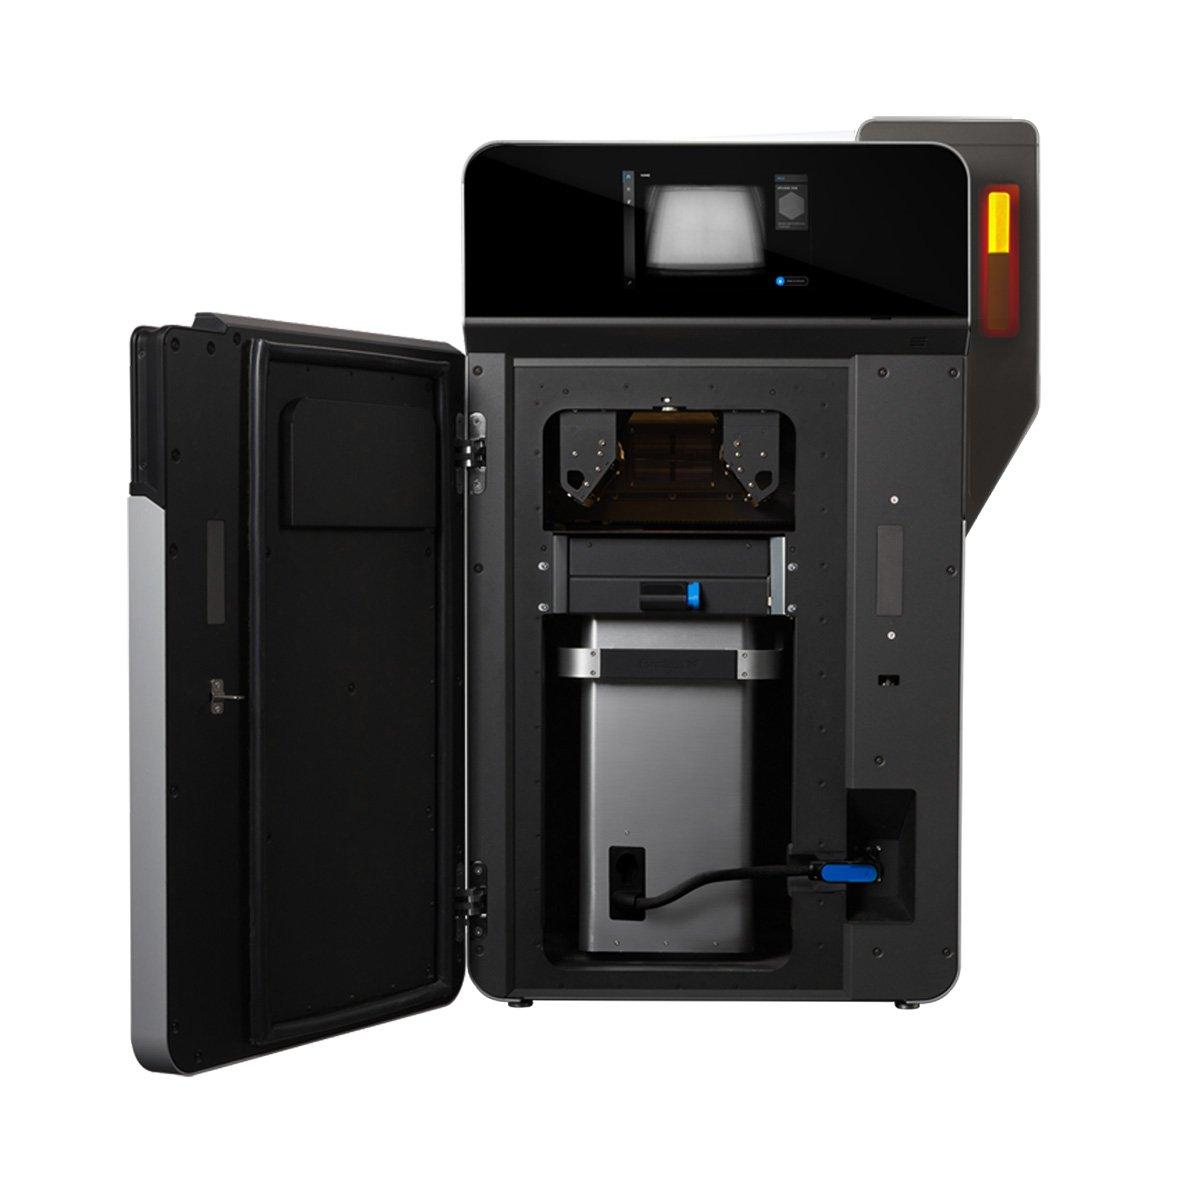 Fuse 1+ 30W printer - Webinar Product Demo